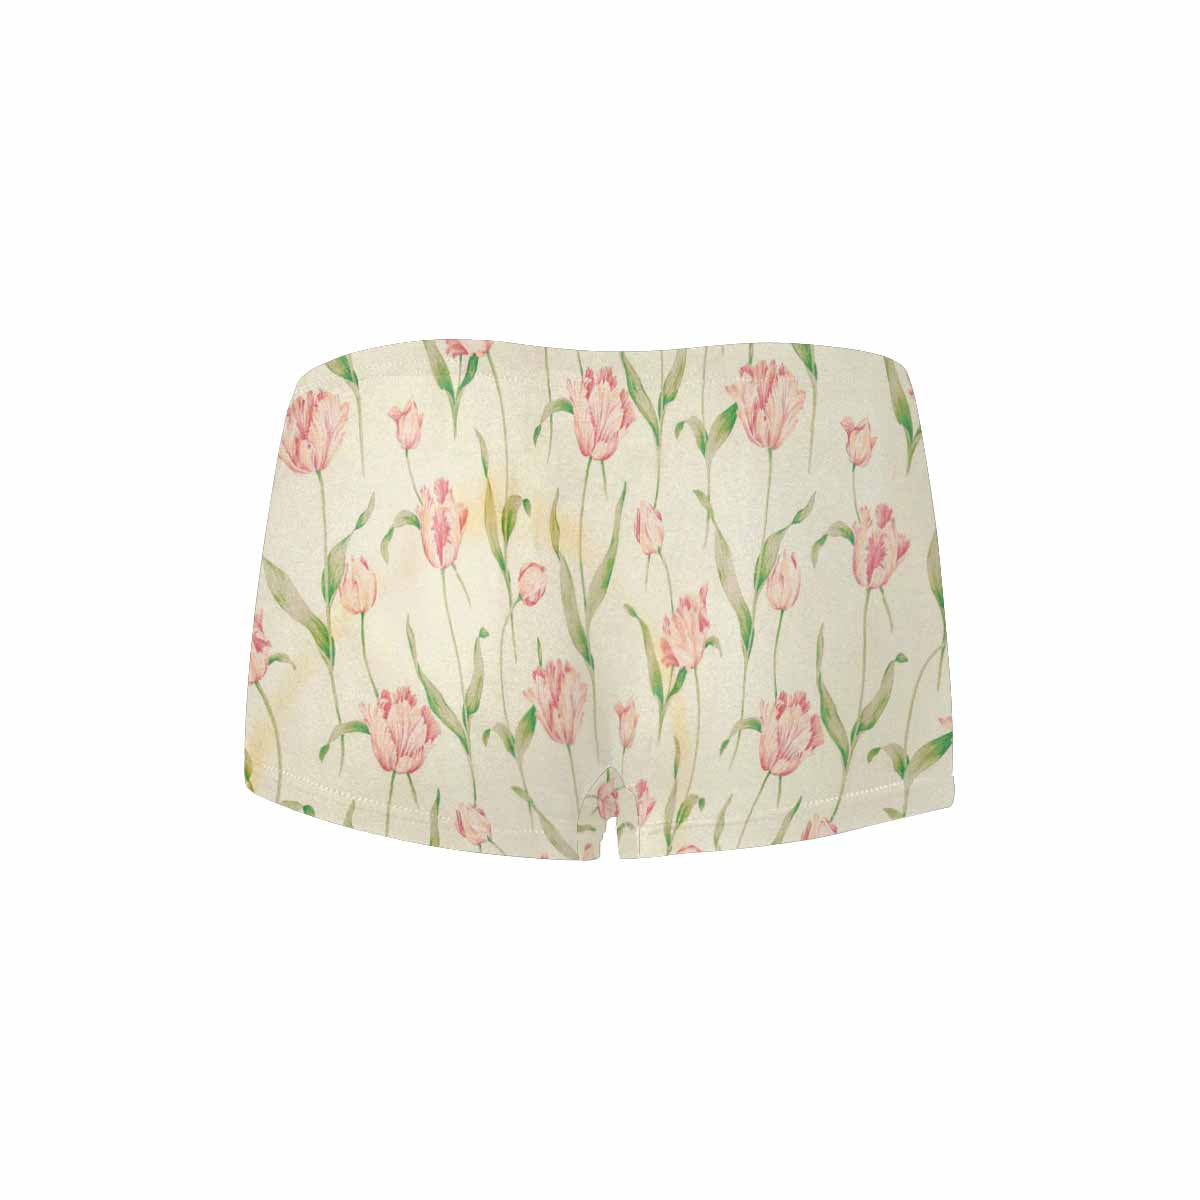 Floral 2, boyshorts, daisy dukes, pum pum shorts, panties, design 14